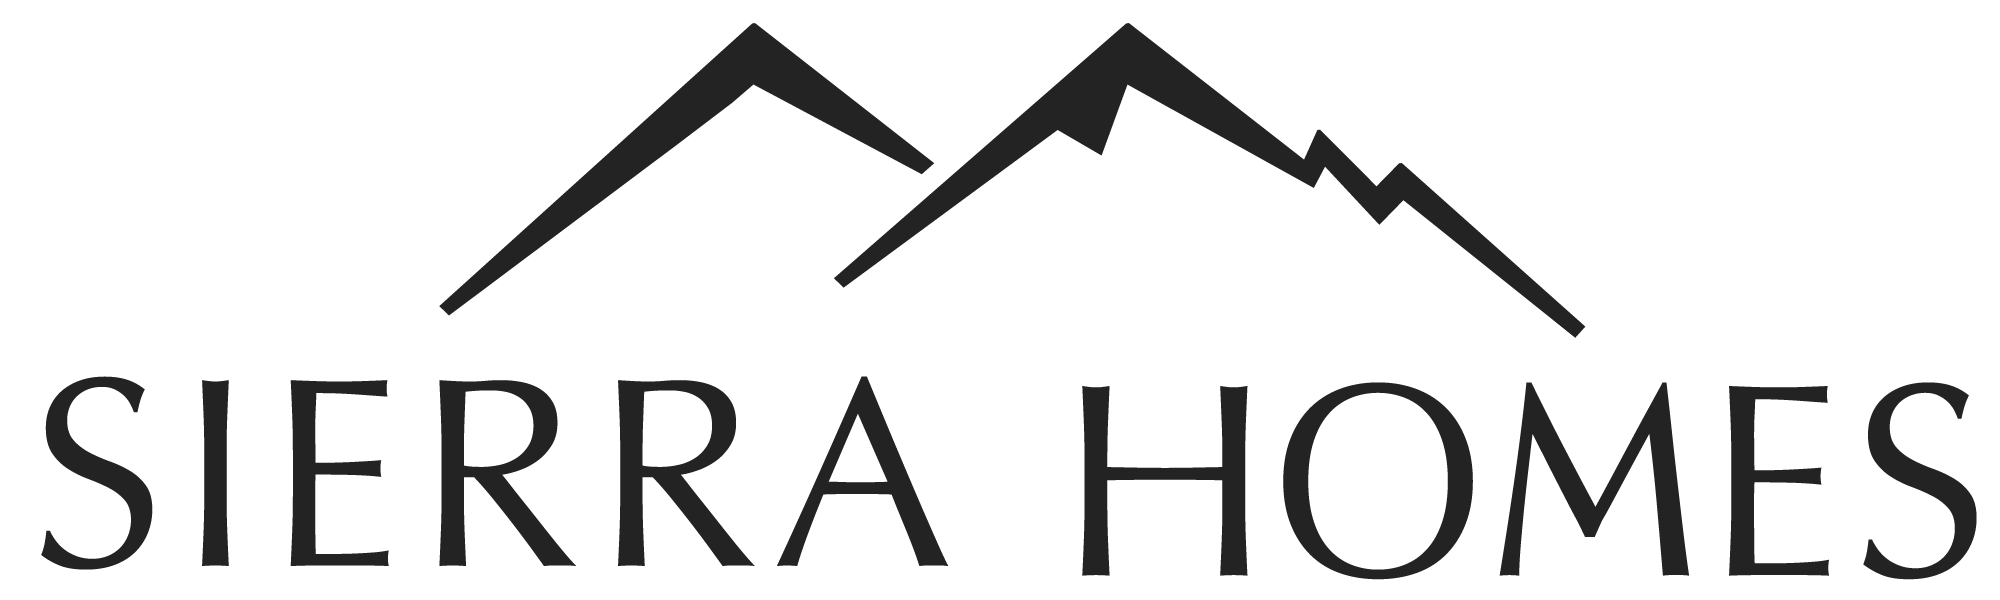 Sierra Homes  | Custom Home Builder | Kennydale, Renton, Issaquah, Newcastle, WA